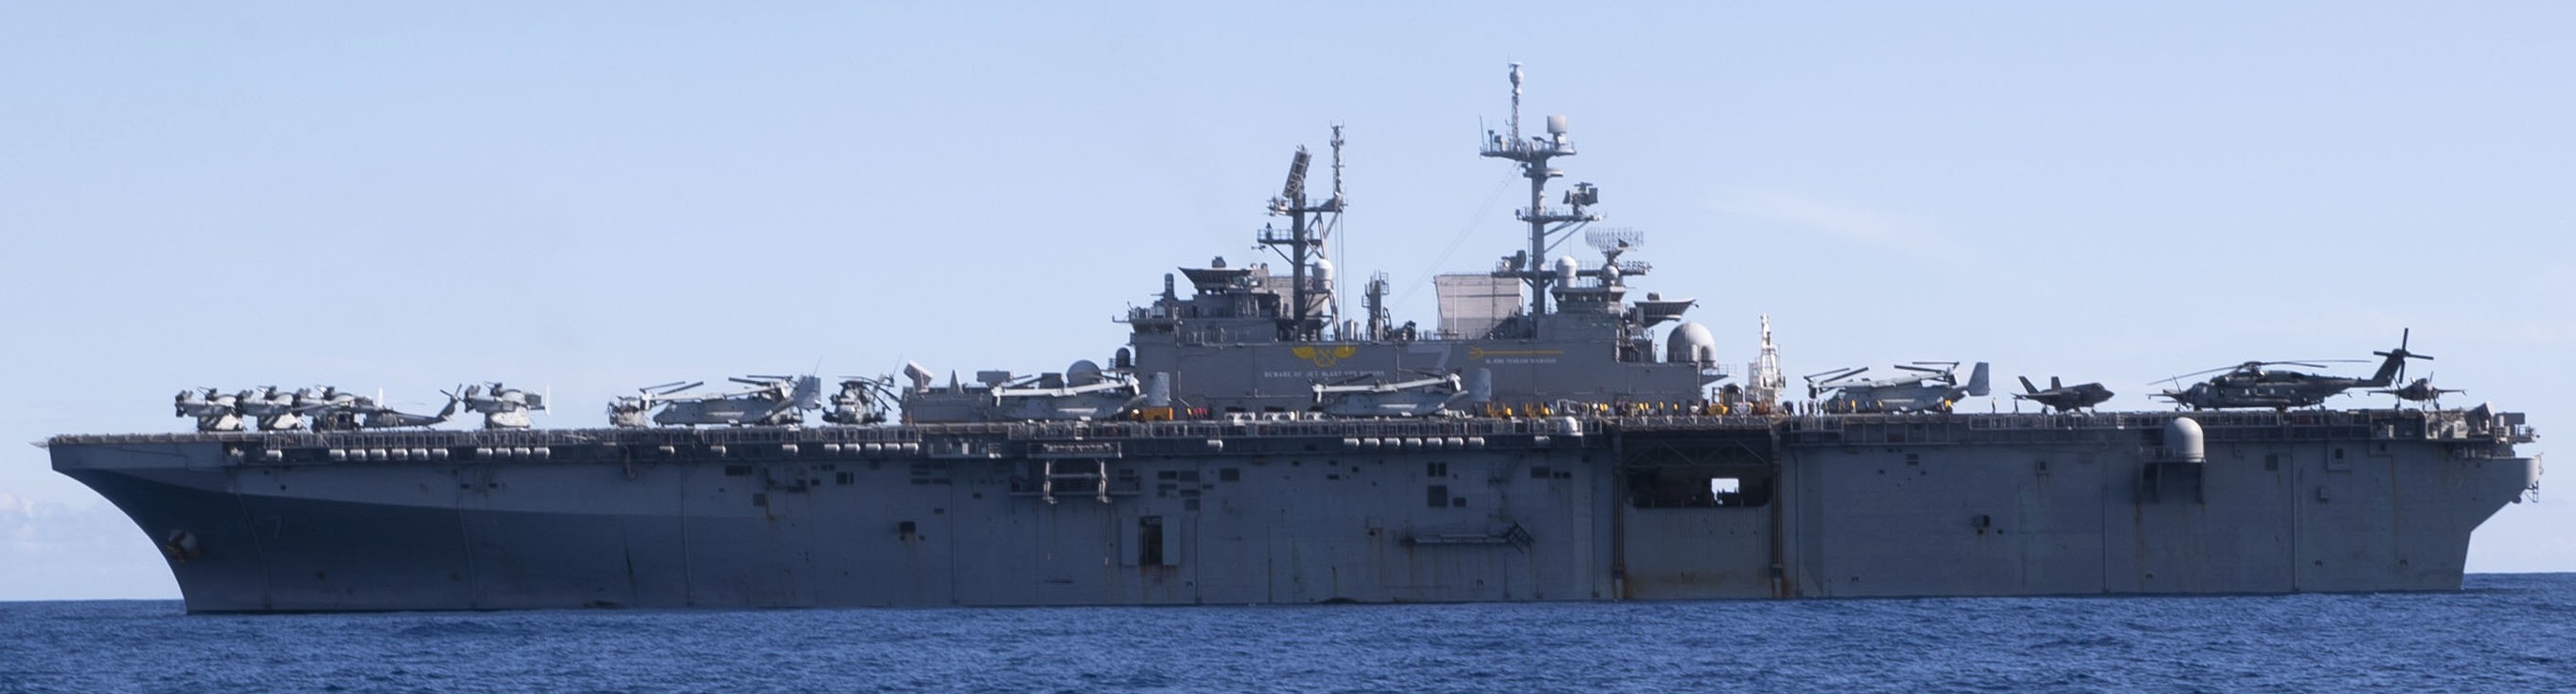 lha-7 uss tripoli america class amphibious assault ship landing us navy marines vmm-262 69